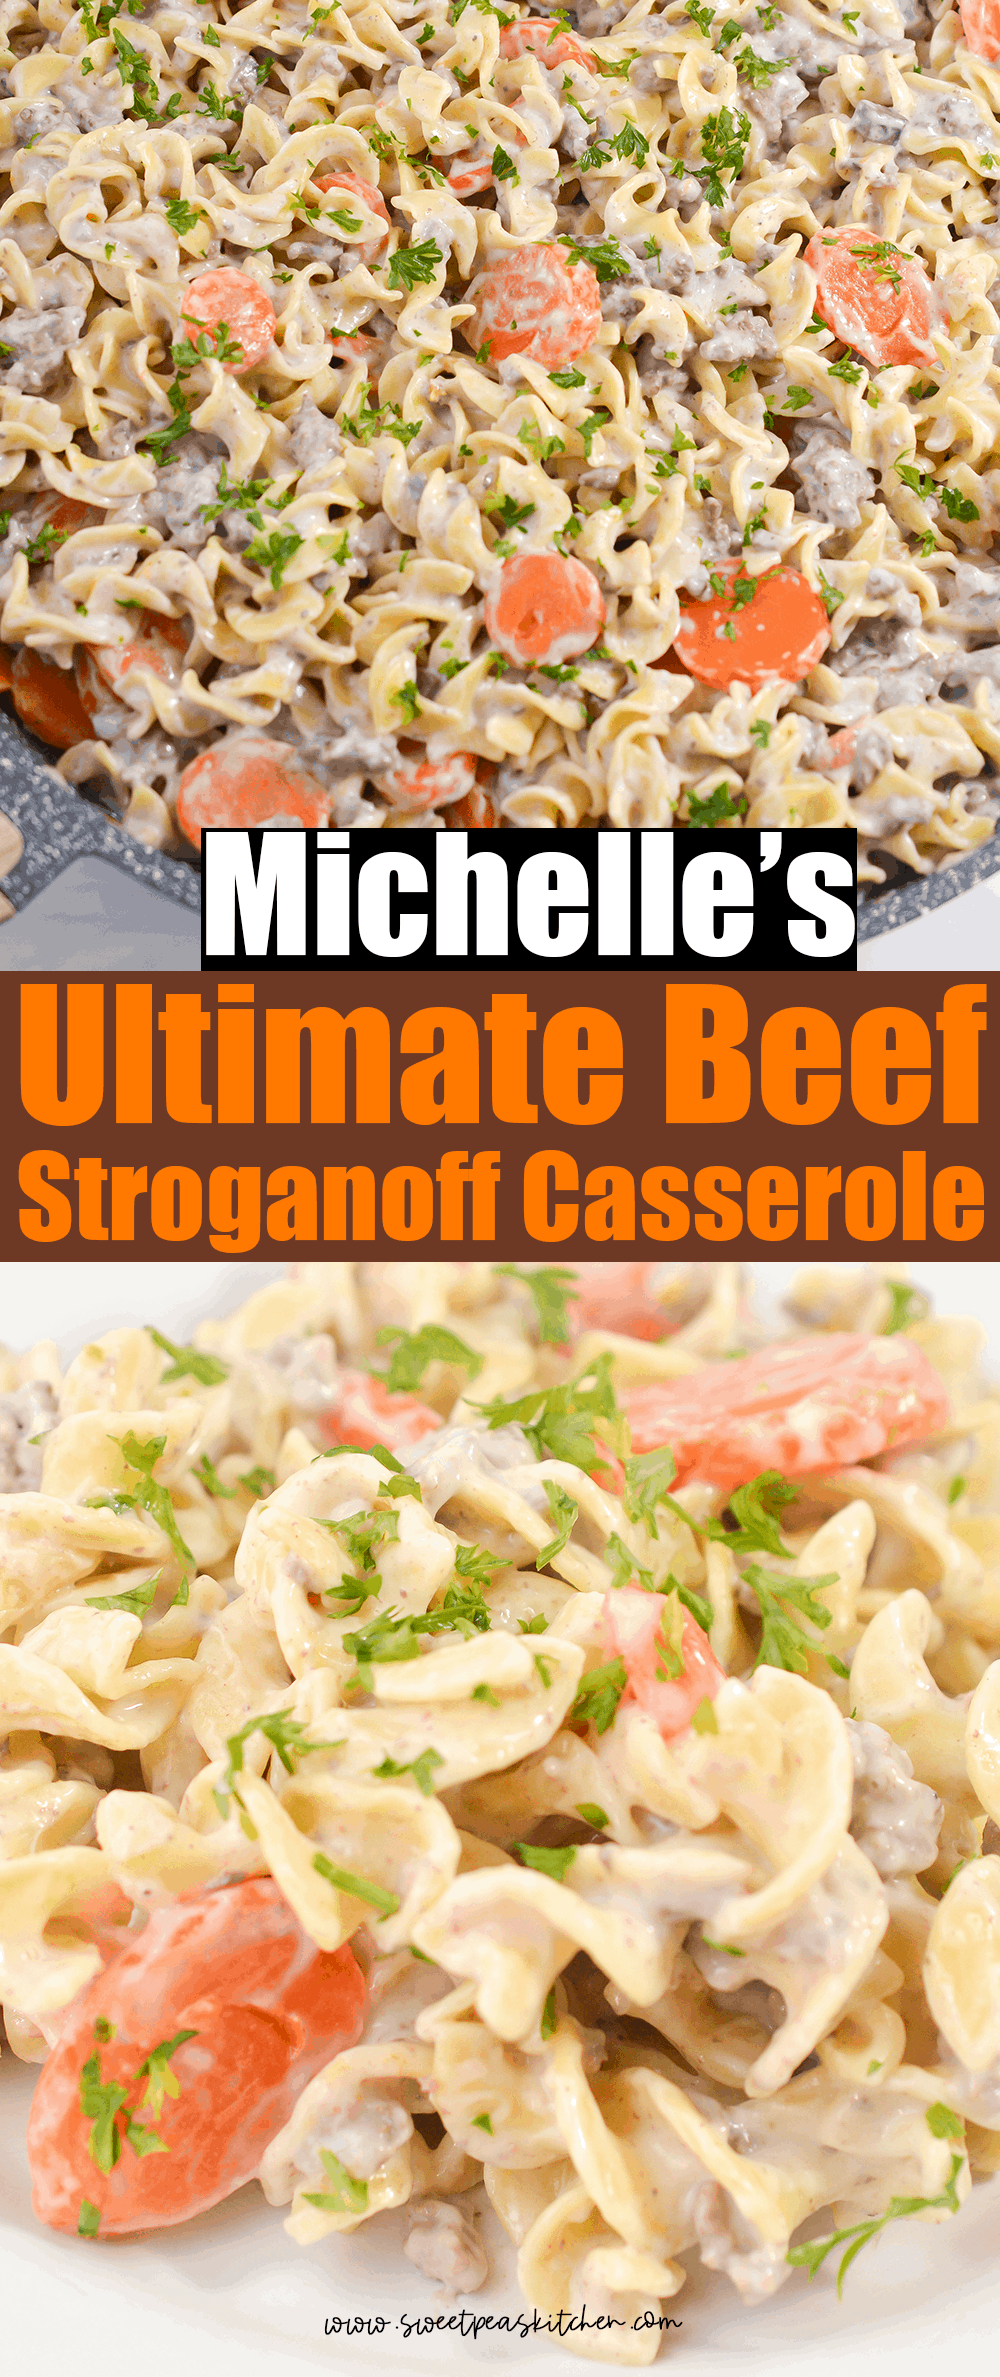 Michelle's Ultimate Beef Stroganoff Casserole